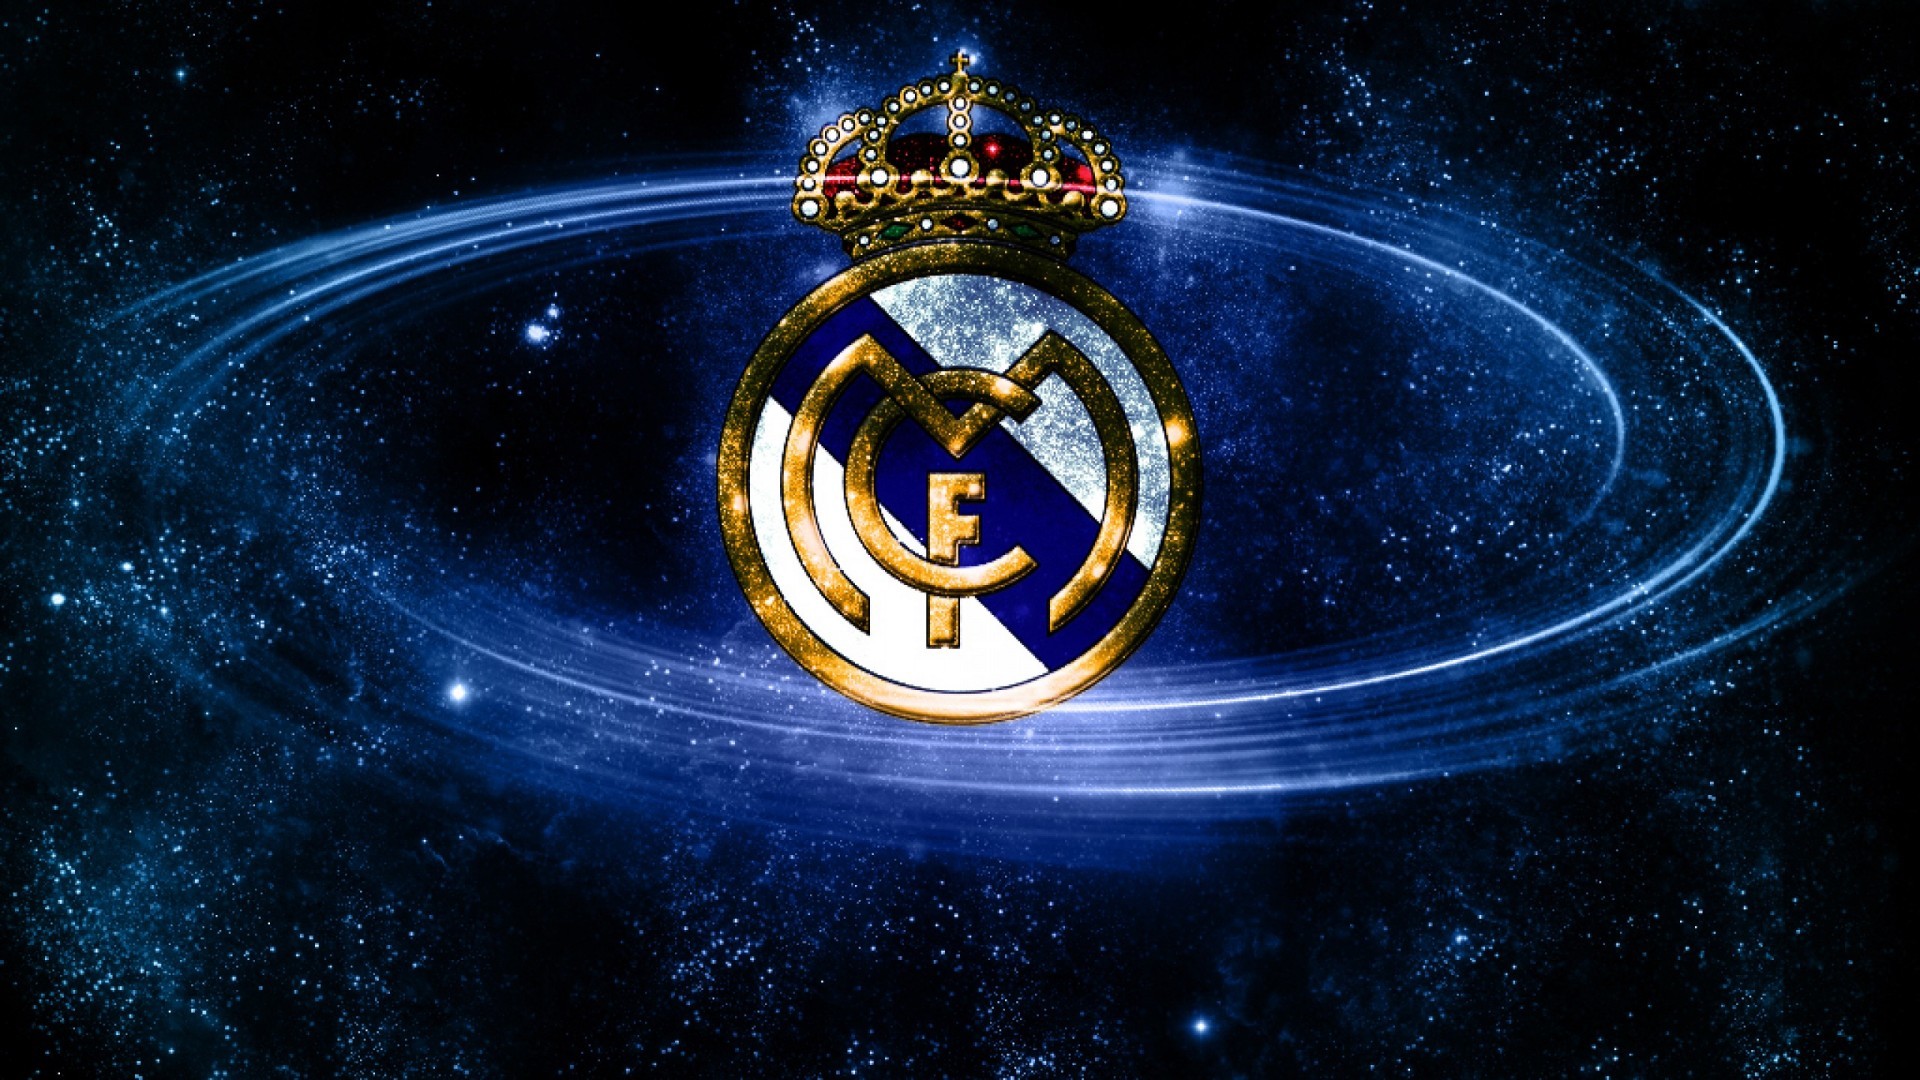 1920x1080 Download Fullsize Image Â· Real Madrid HD Logo Cool Soccer Wallpapers  